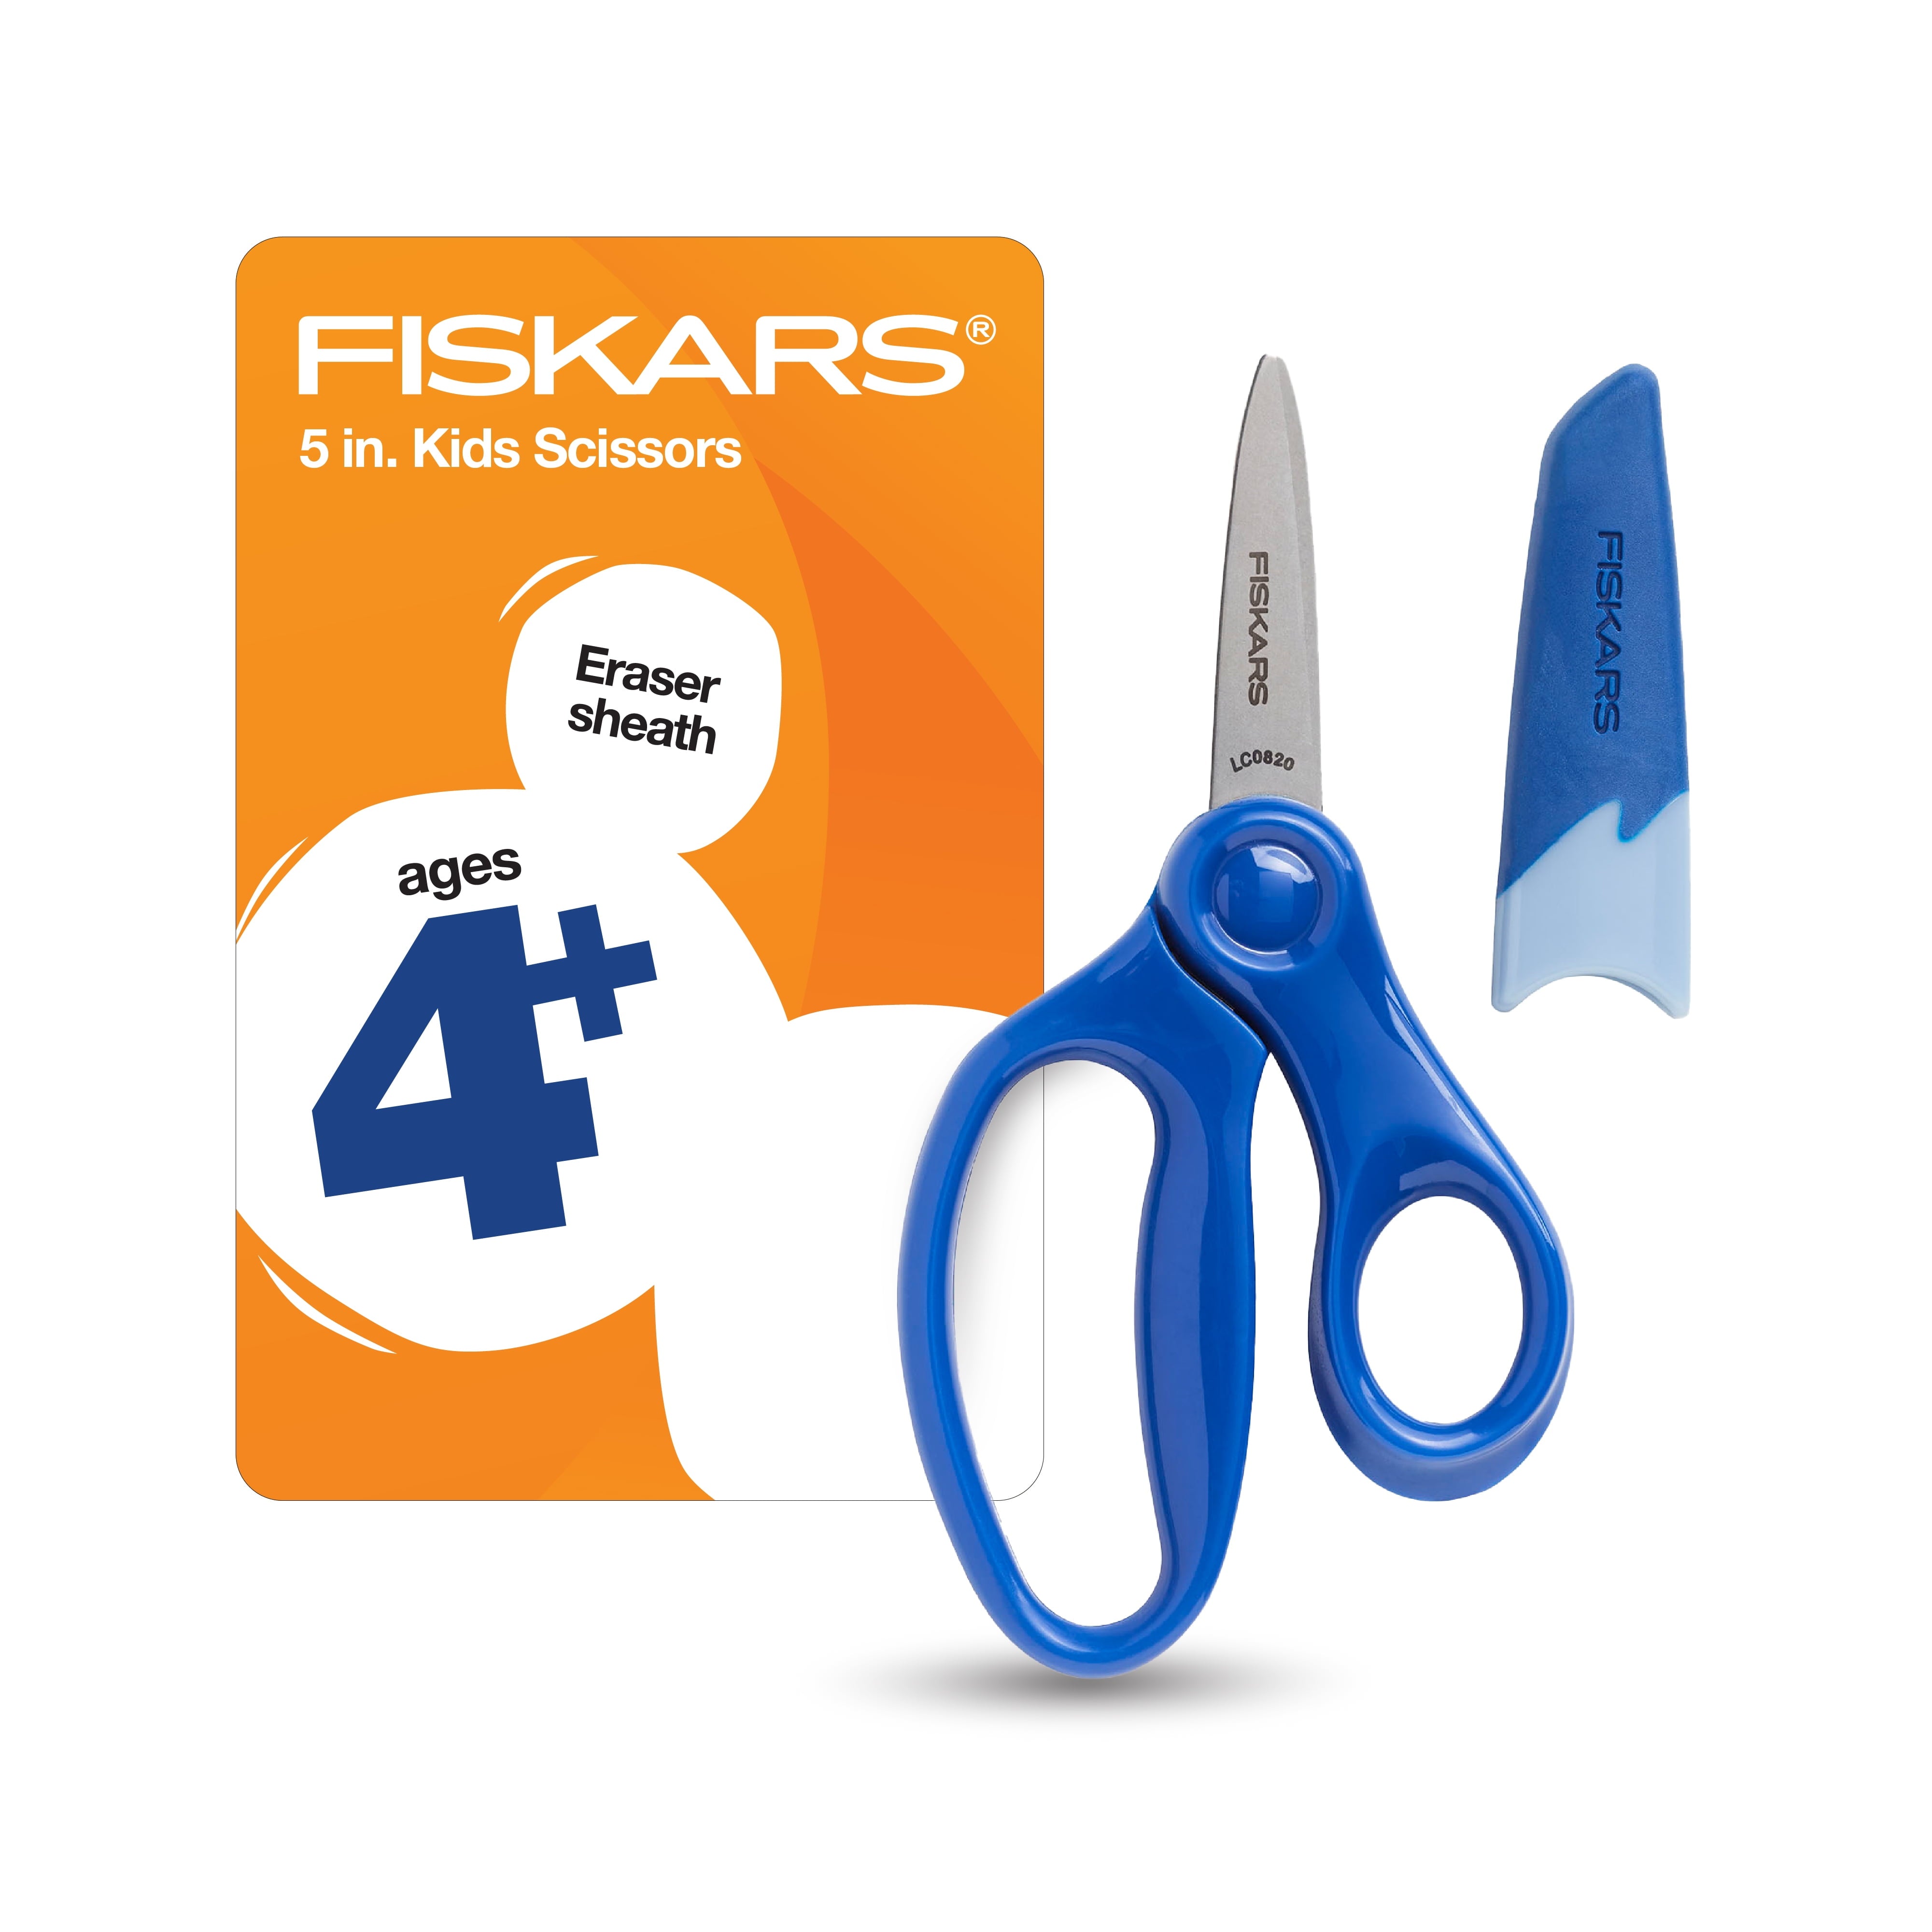 Fiskars 5" Pointed Kids Scissors with Eraser Sheath (Ages 4+)